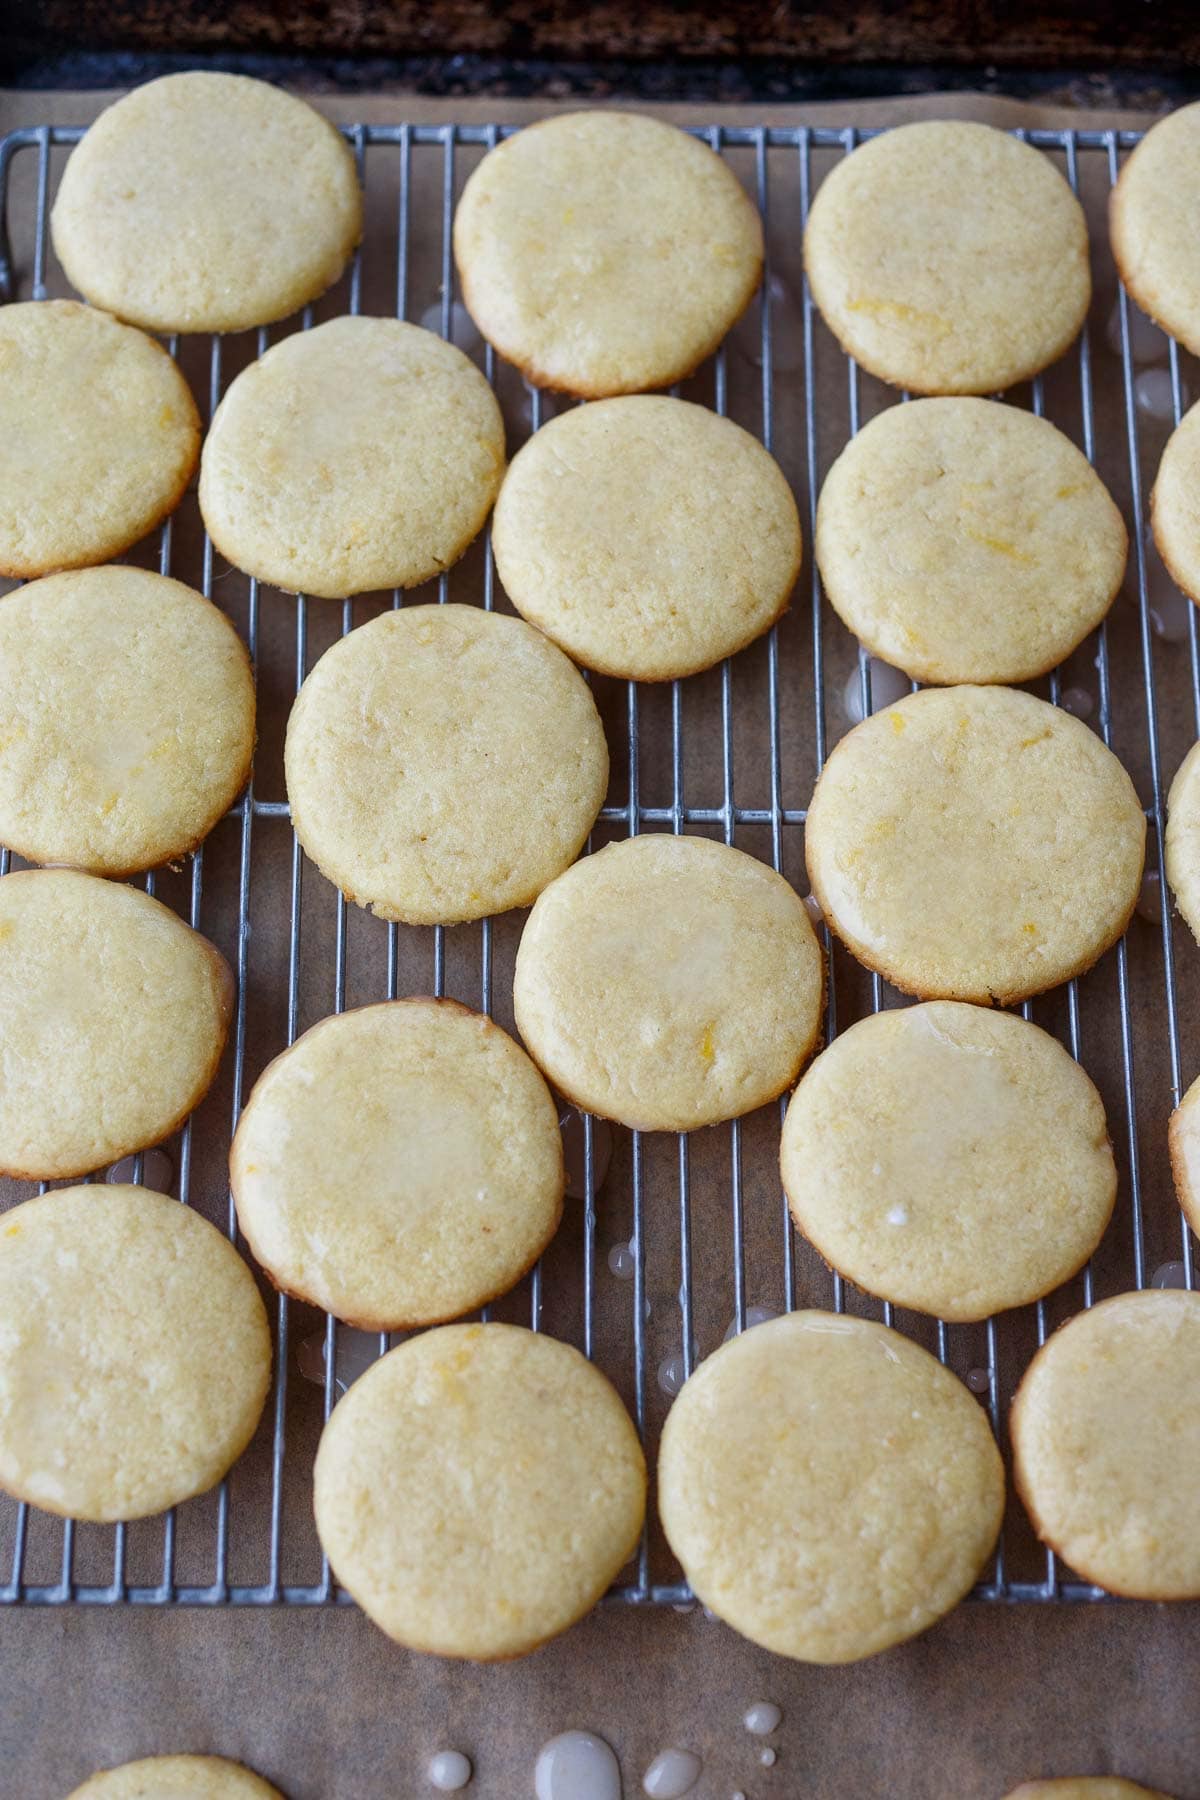 lemon cookies on cooling rack, drizzled with lemon glaze.